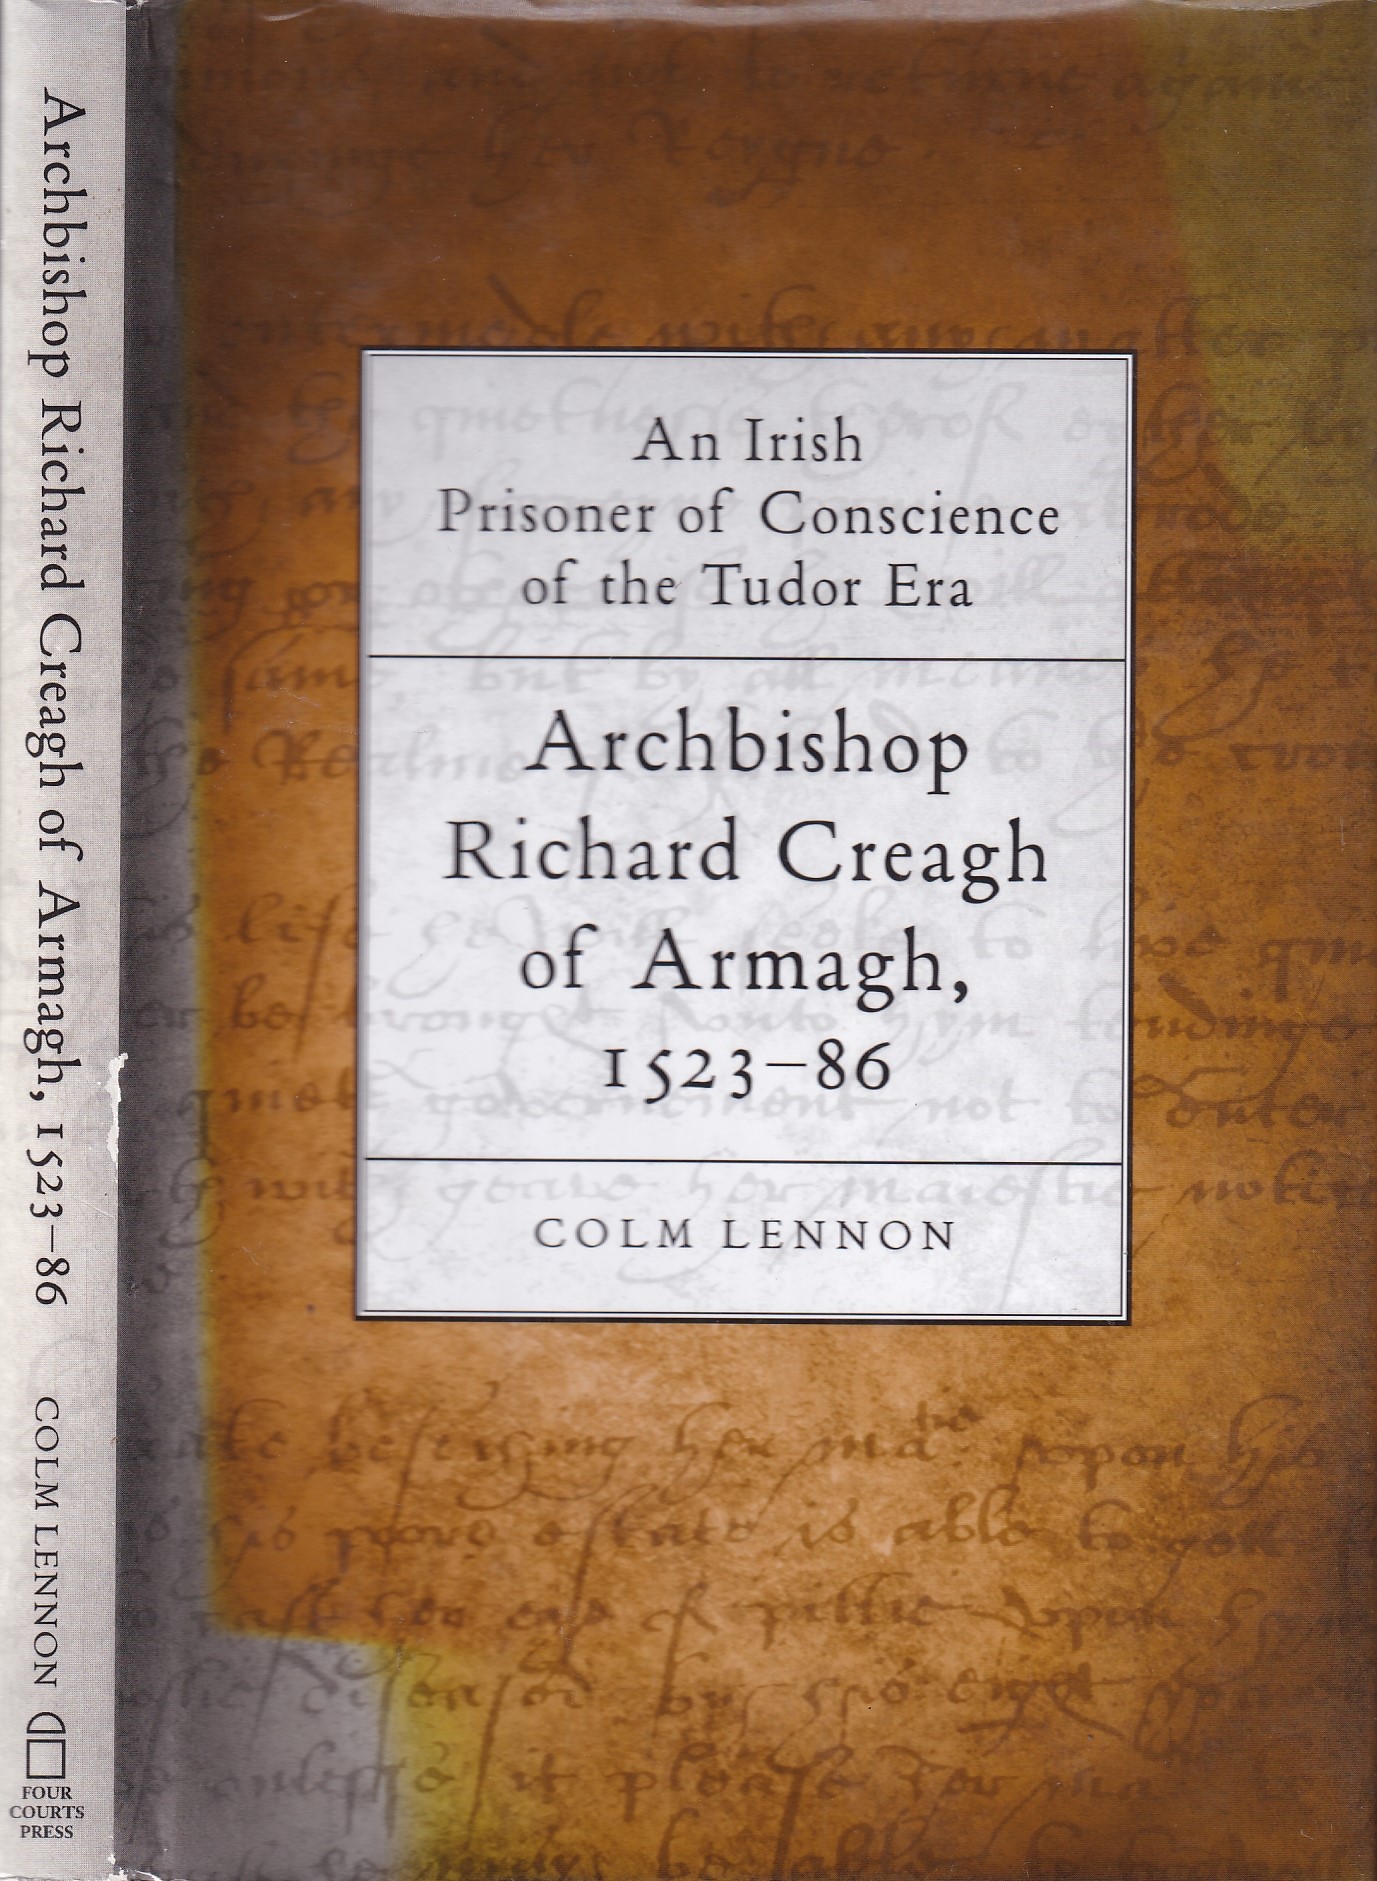 An Irish Prisoner of Conscience in the Tudor Era: Archbishop Richard Creagh | Colm Lennon | Charlie Byrne's